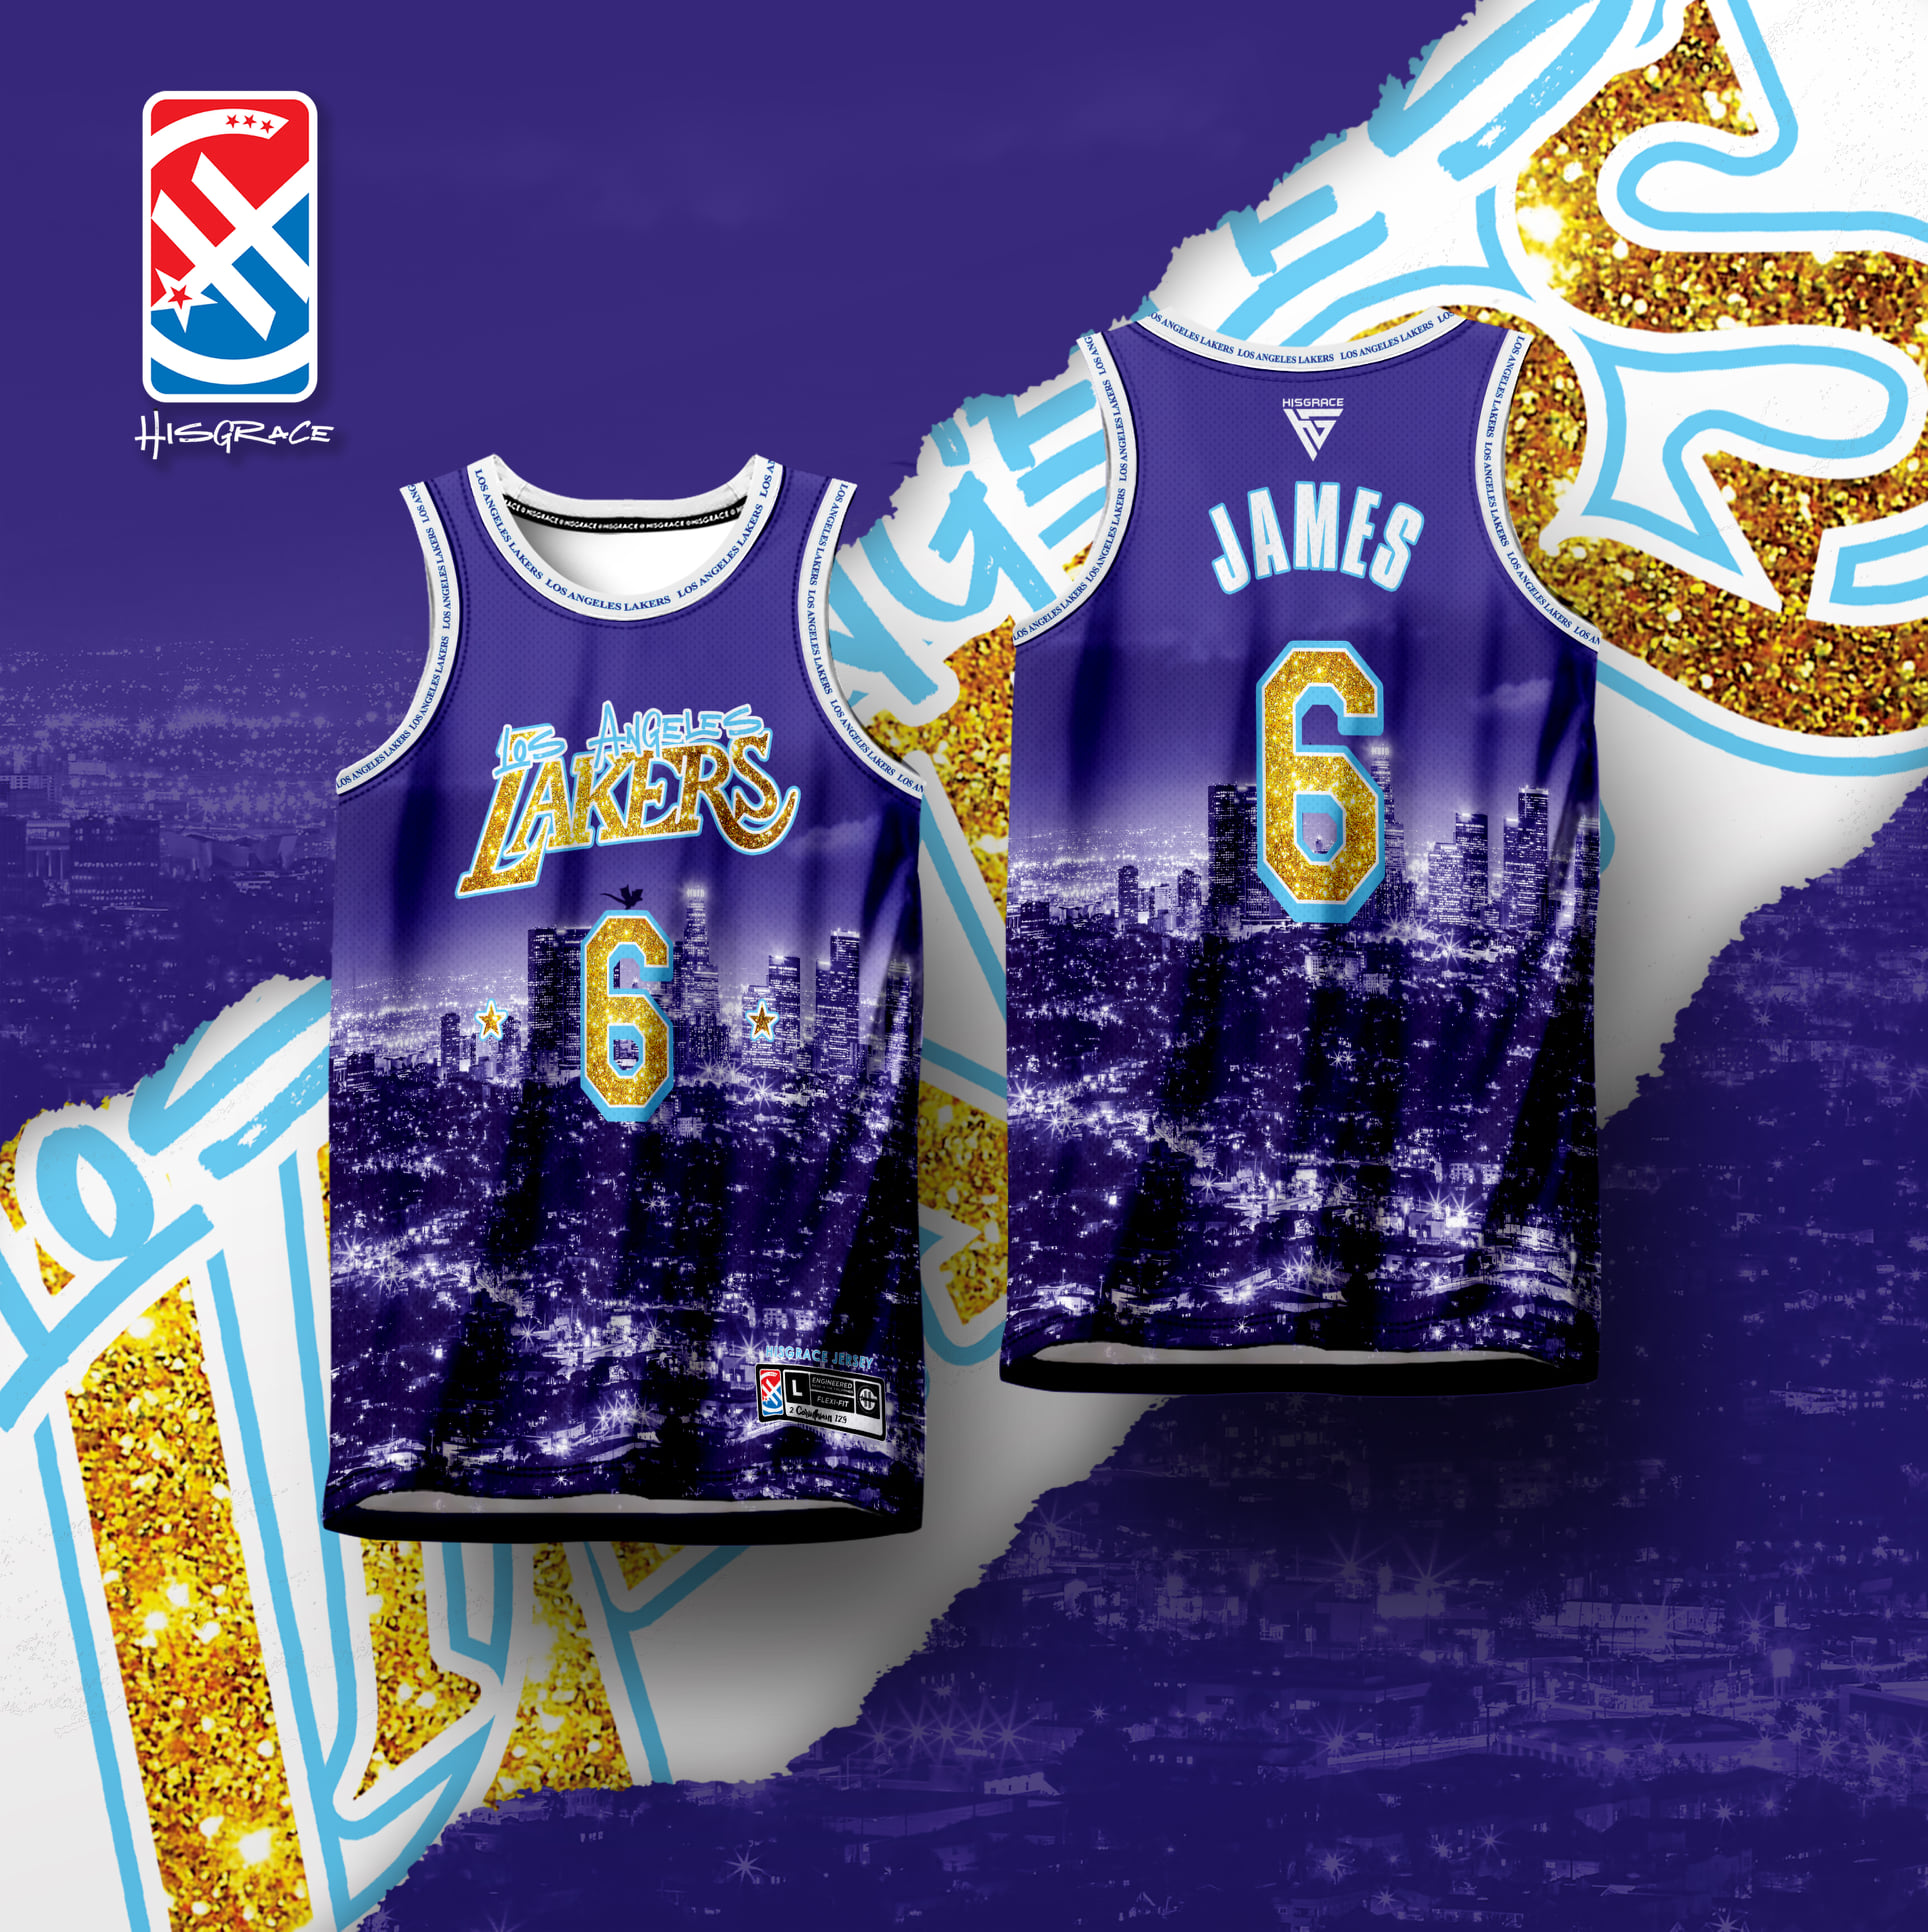 Rate this city jersey 1-10 #foryou #lakers #nba #lakersbasketball #lak, lakers